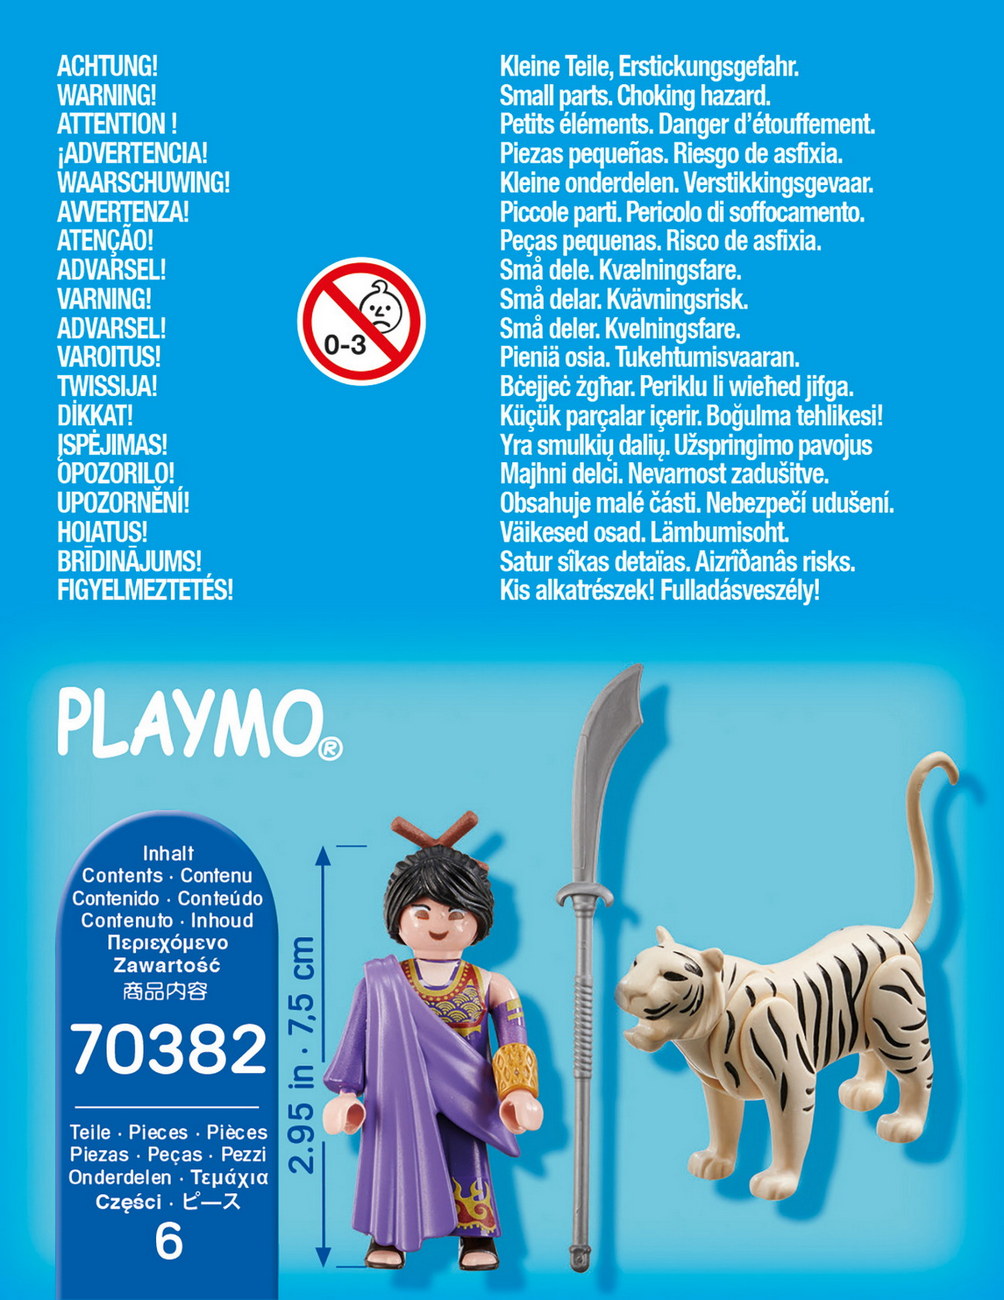 Playmobil 70382 - Asiakämpferin mit Tiger  - Special Plus